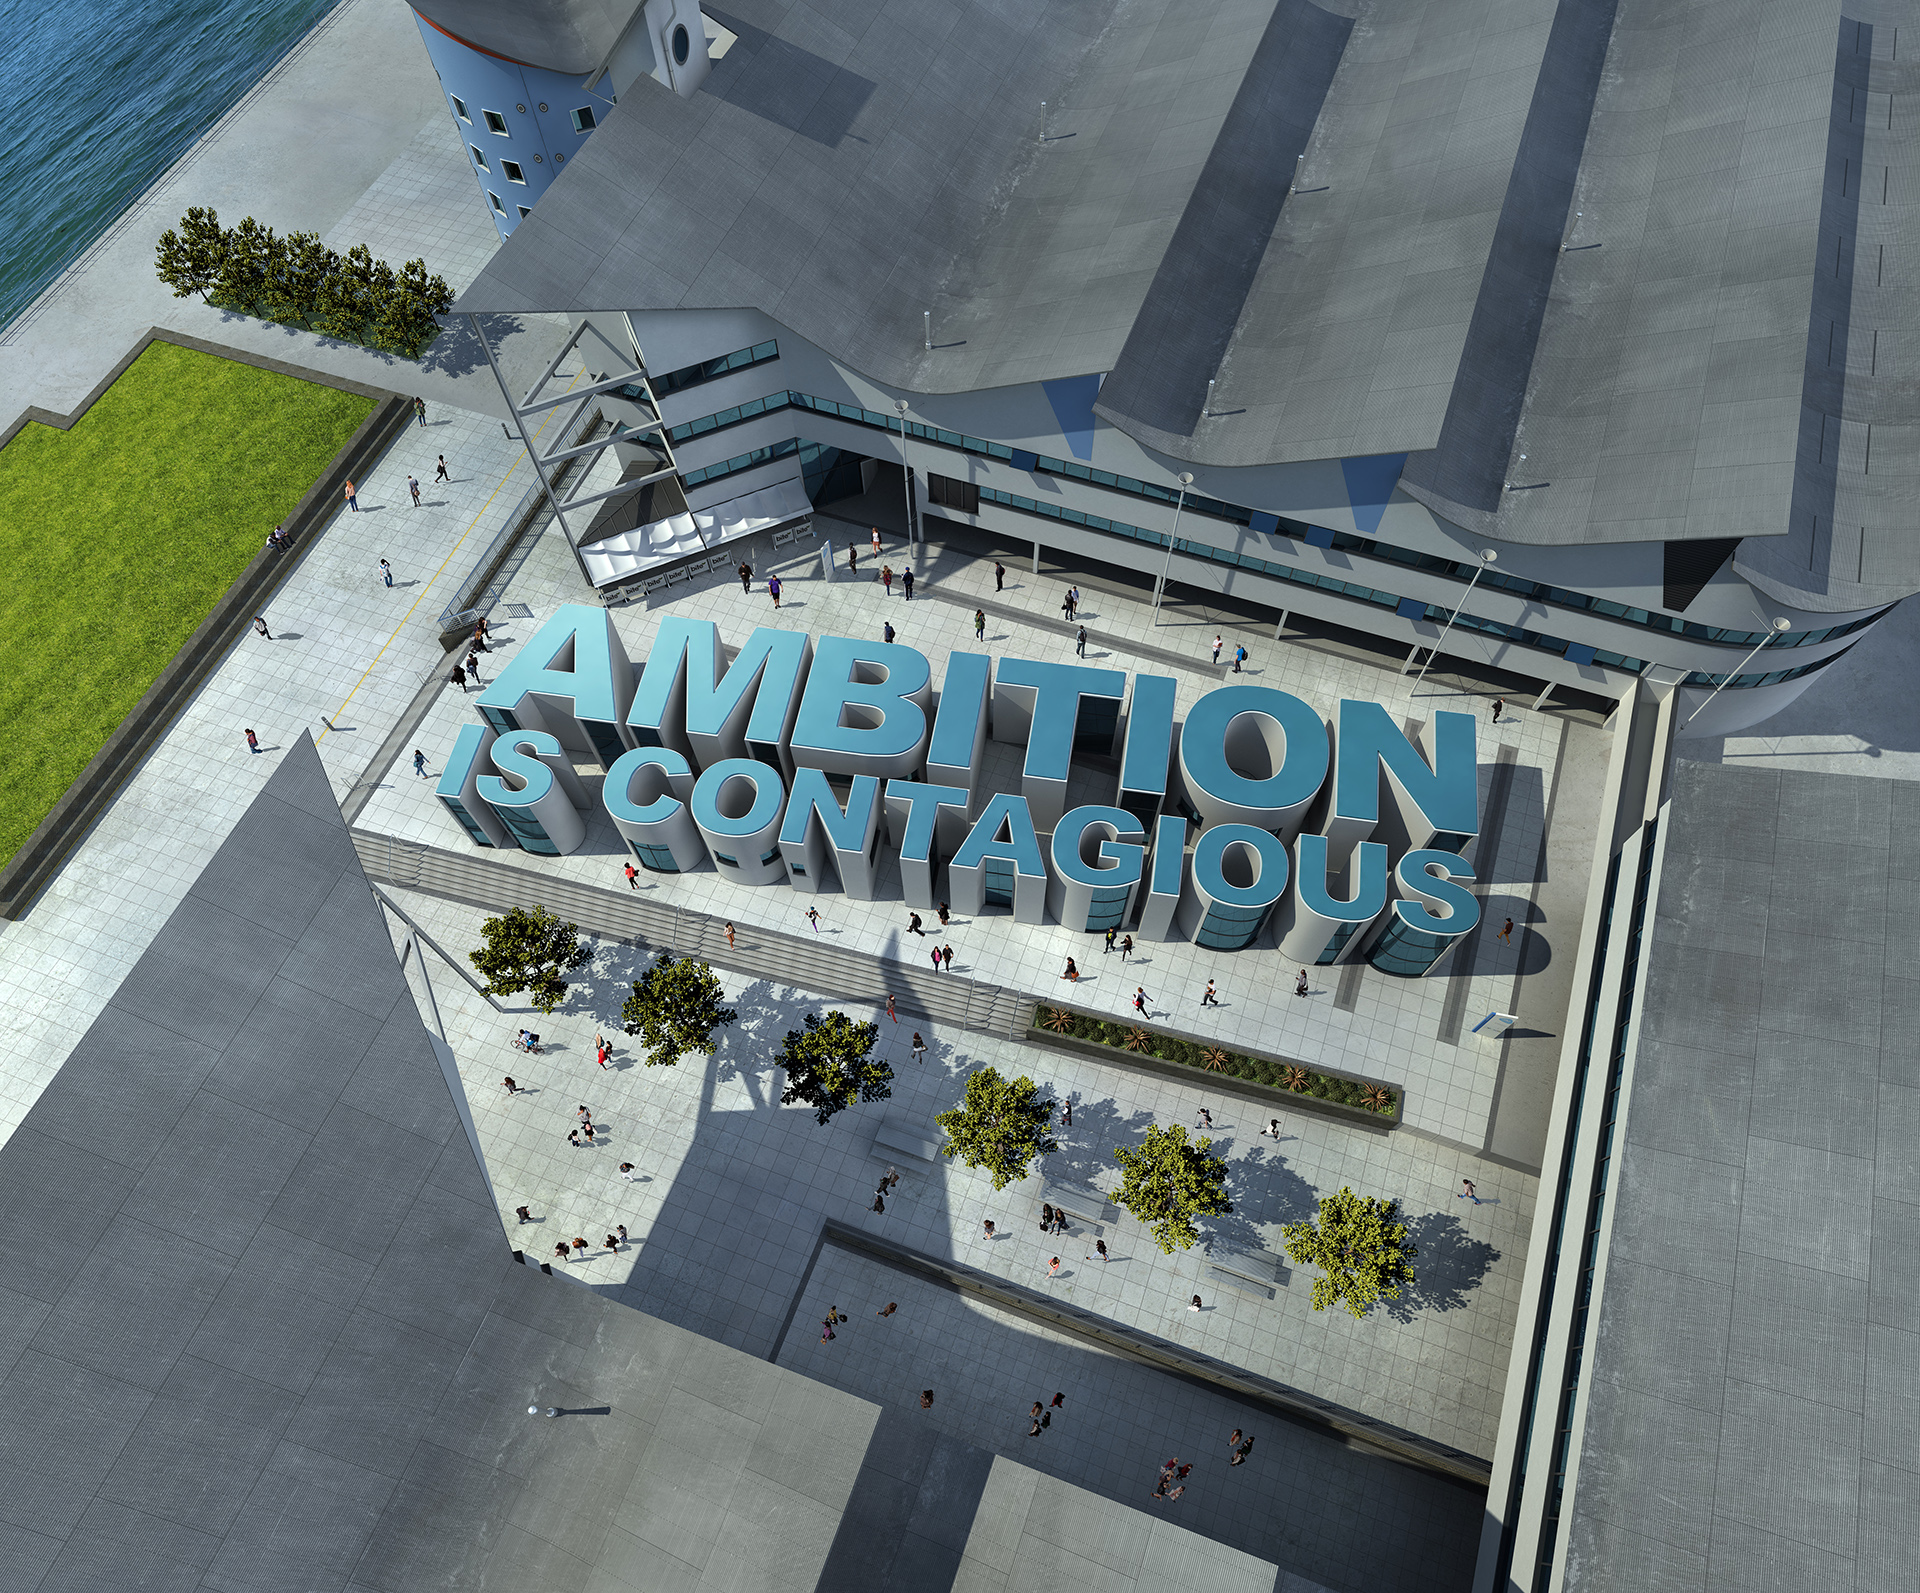 3D Ambition is Contagious Building Illustration